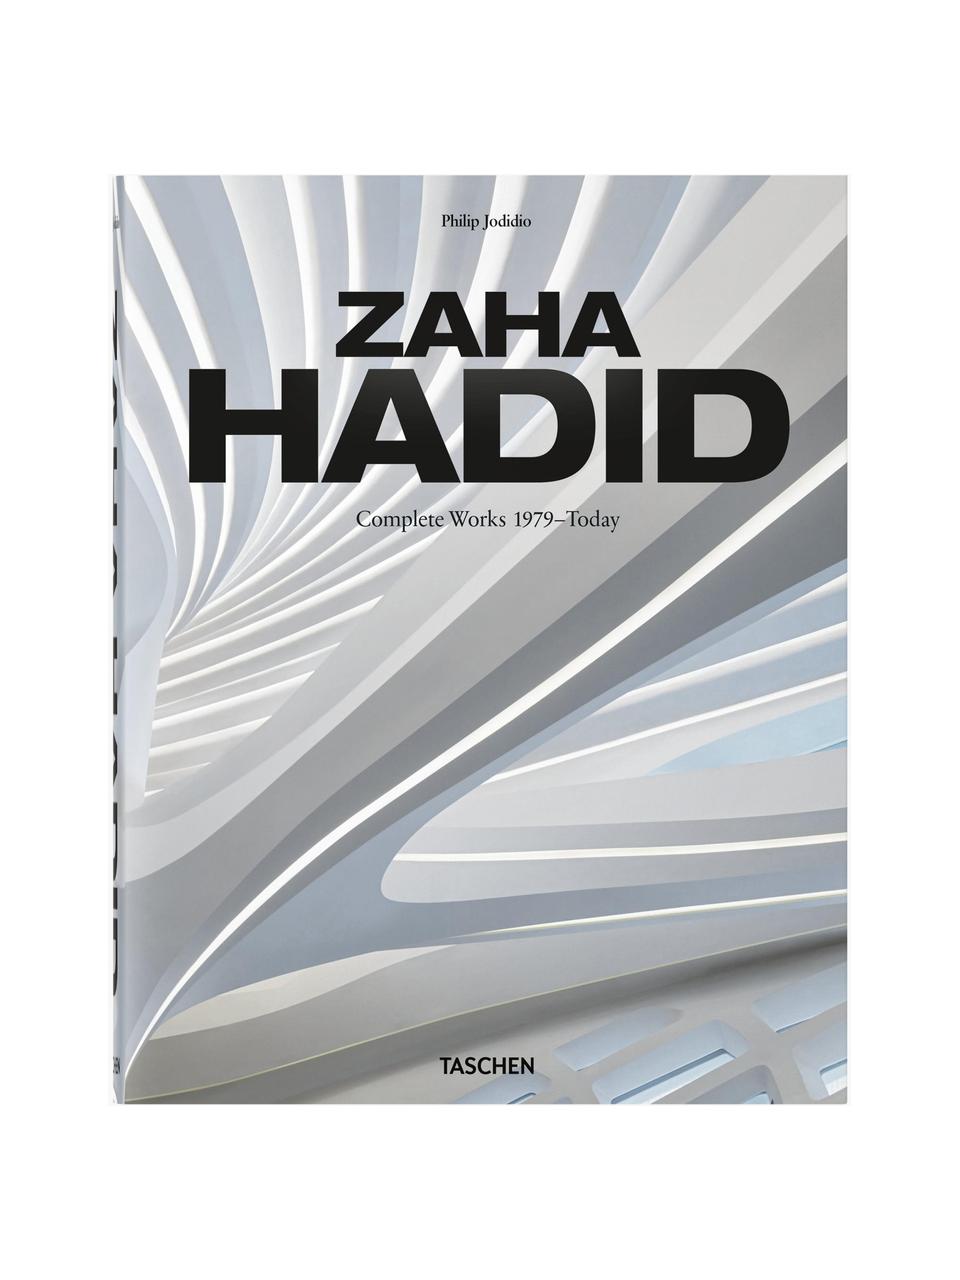 Libro illustrato Zaha Hadid. Complete Works. 1979 - today, Carta, copertina rigida, Zaha Hadid. Opere complete. 1979-oggi, Larg. 23 x Lung. 29 cm